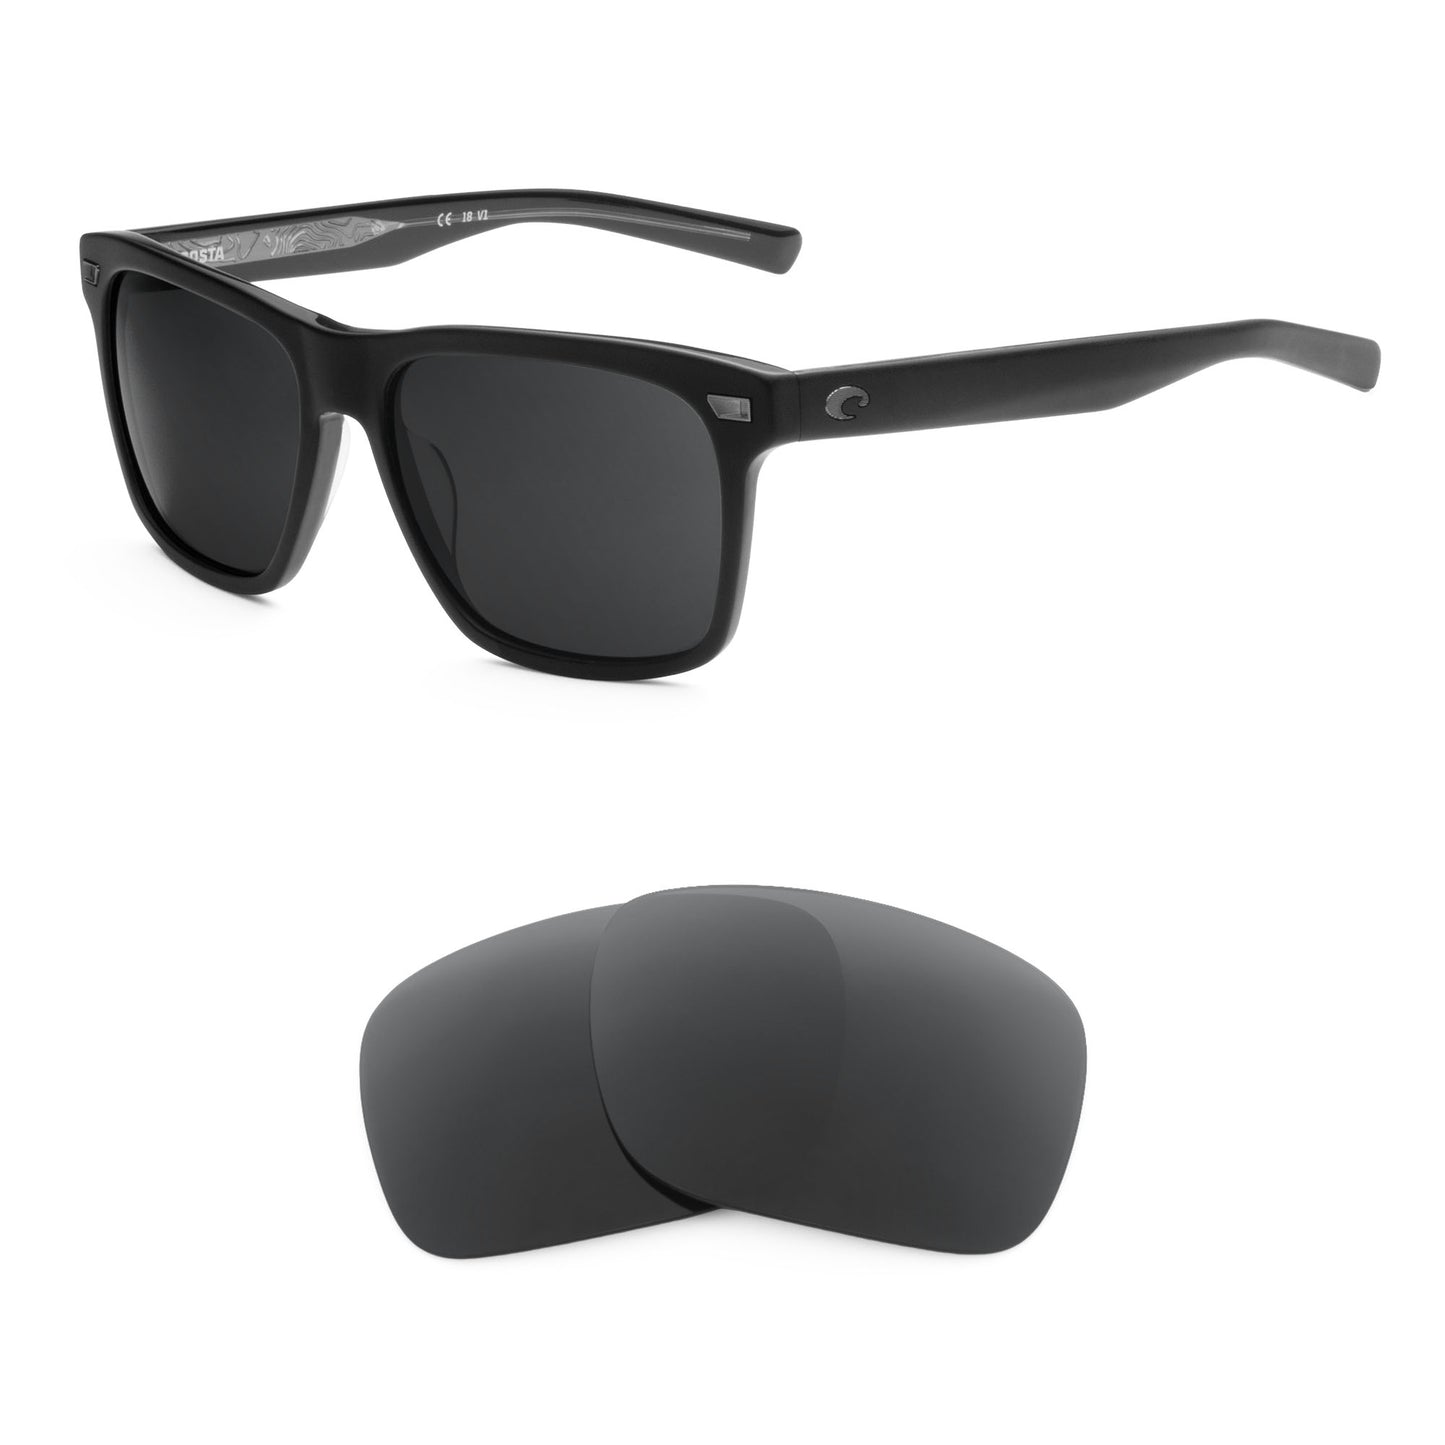 Costa Aransas sunglasses with replacement lenses